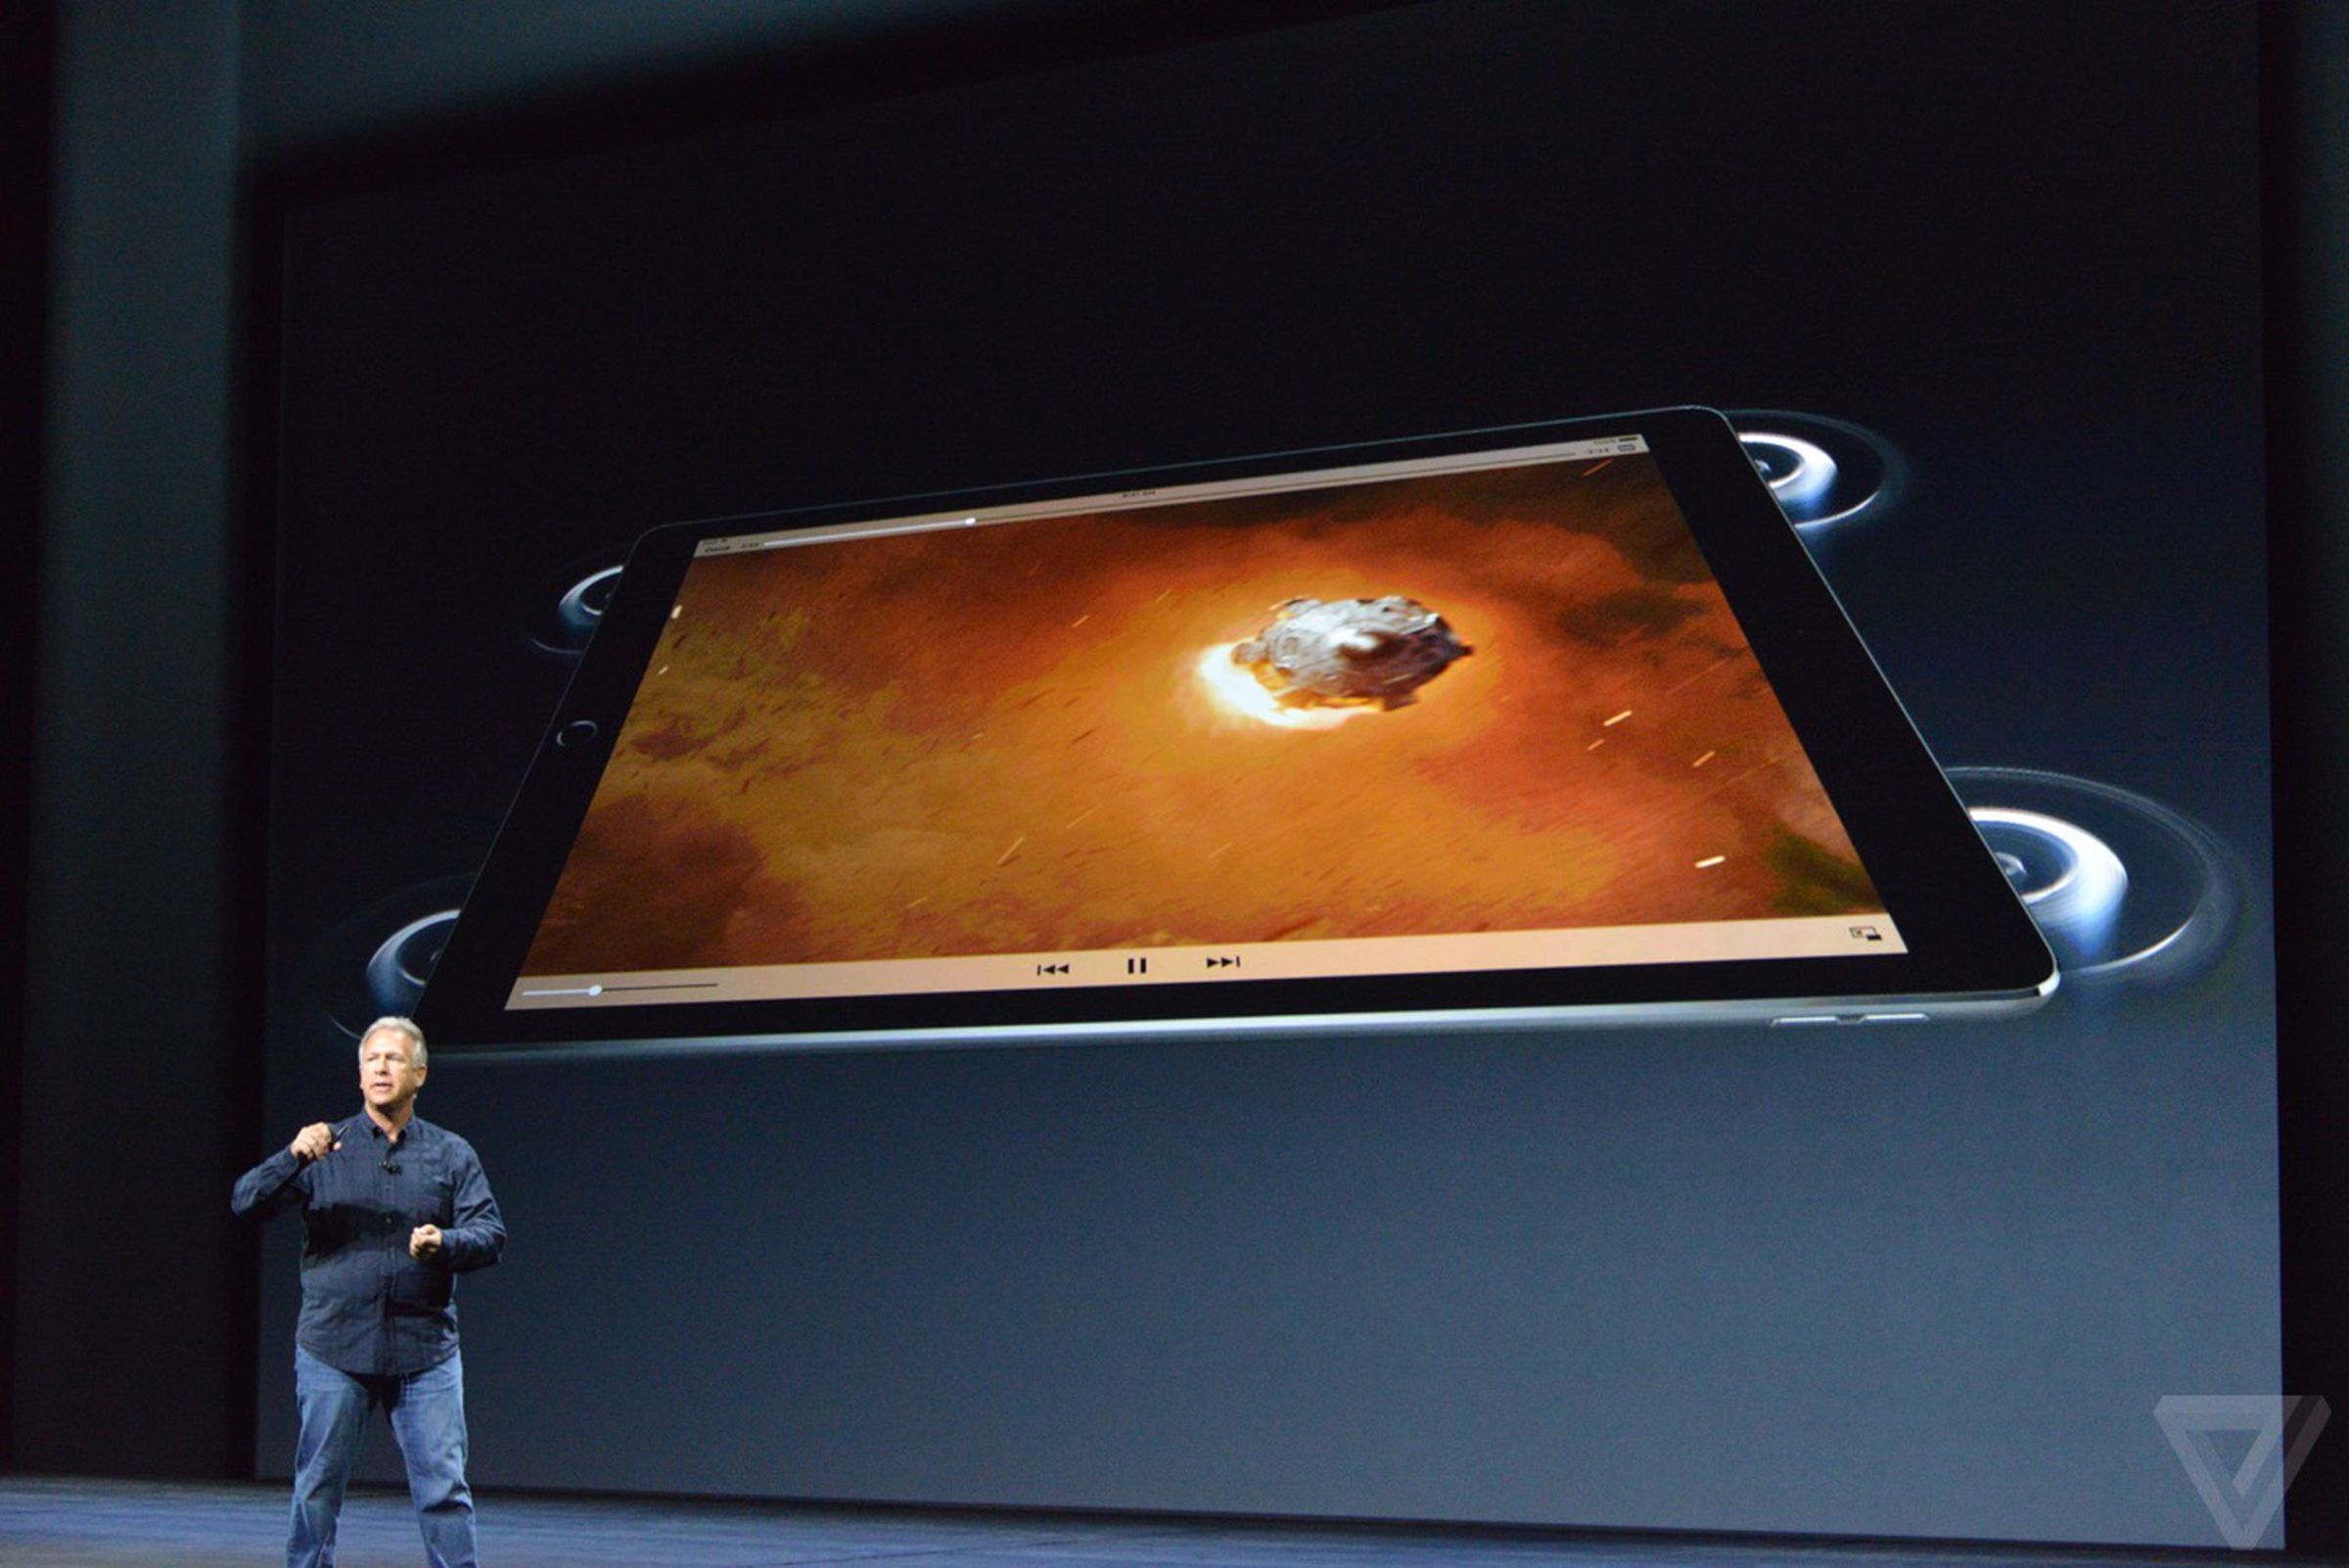 iPad Pro announcement photos